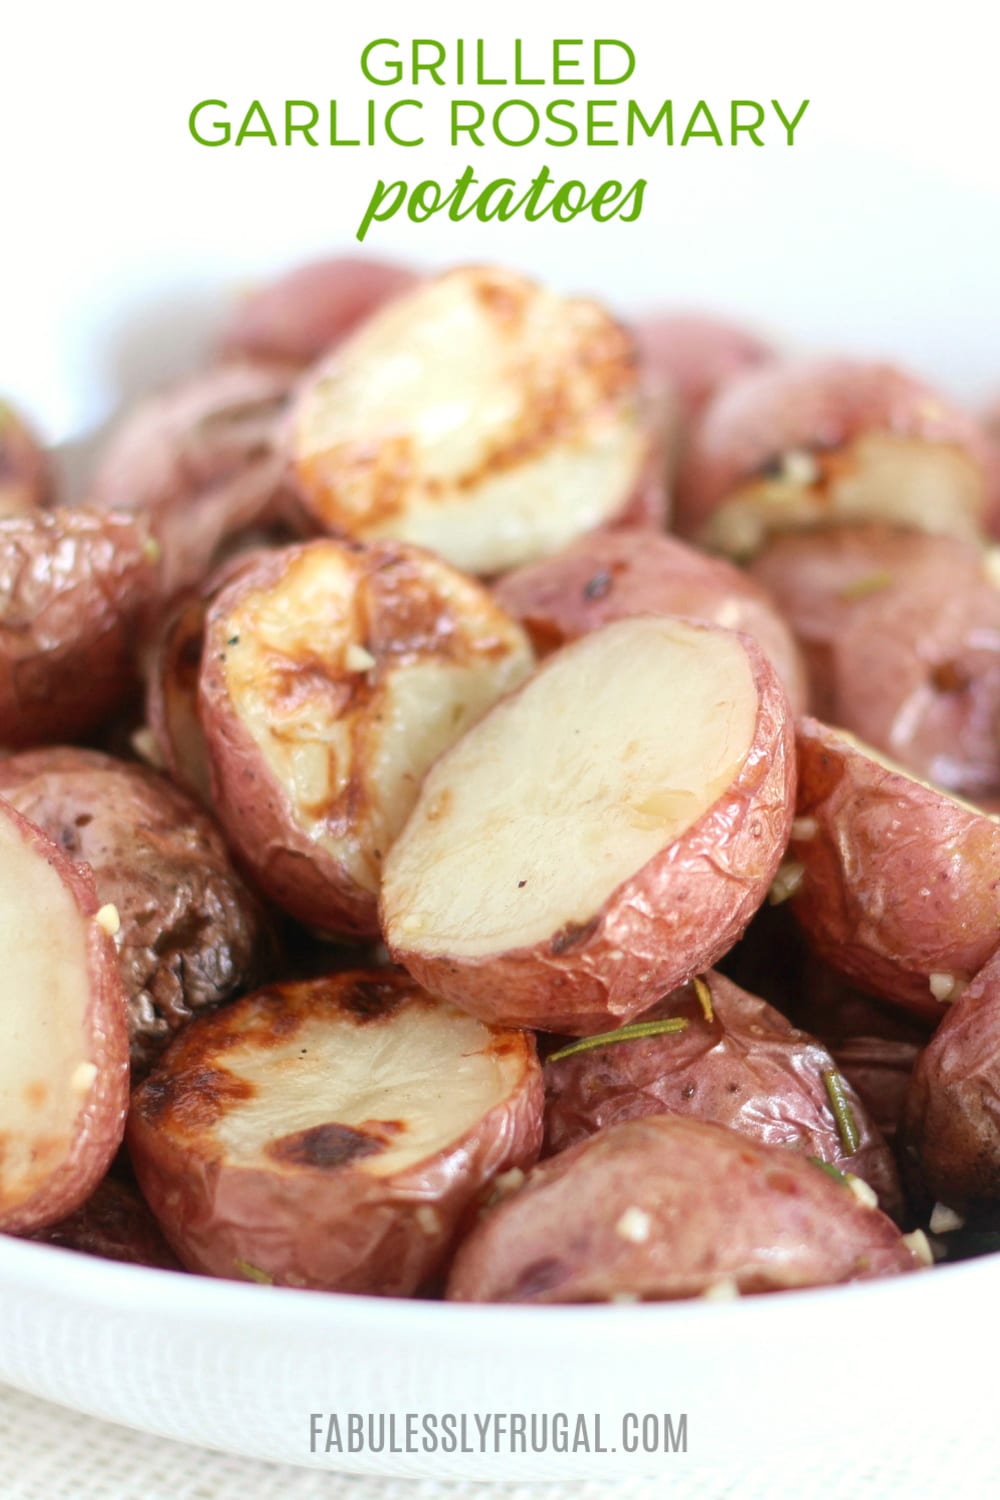 Grilled garlic rosemary potatoes